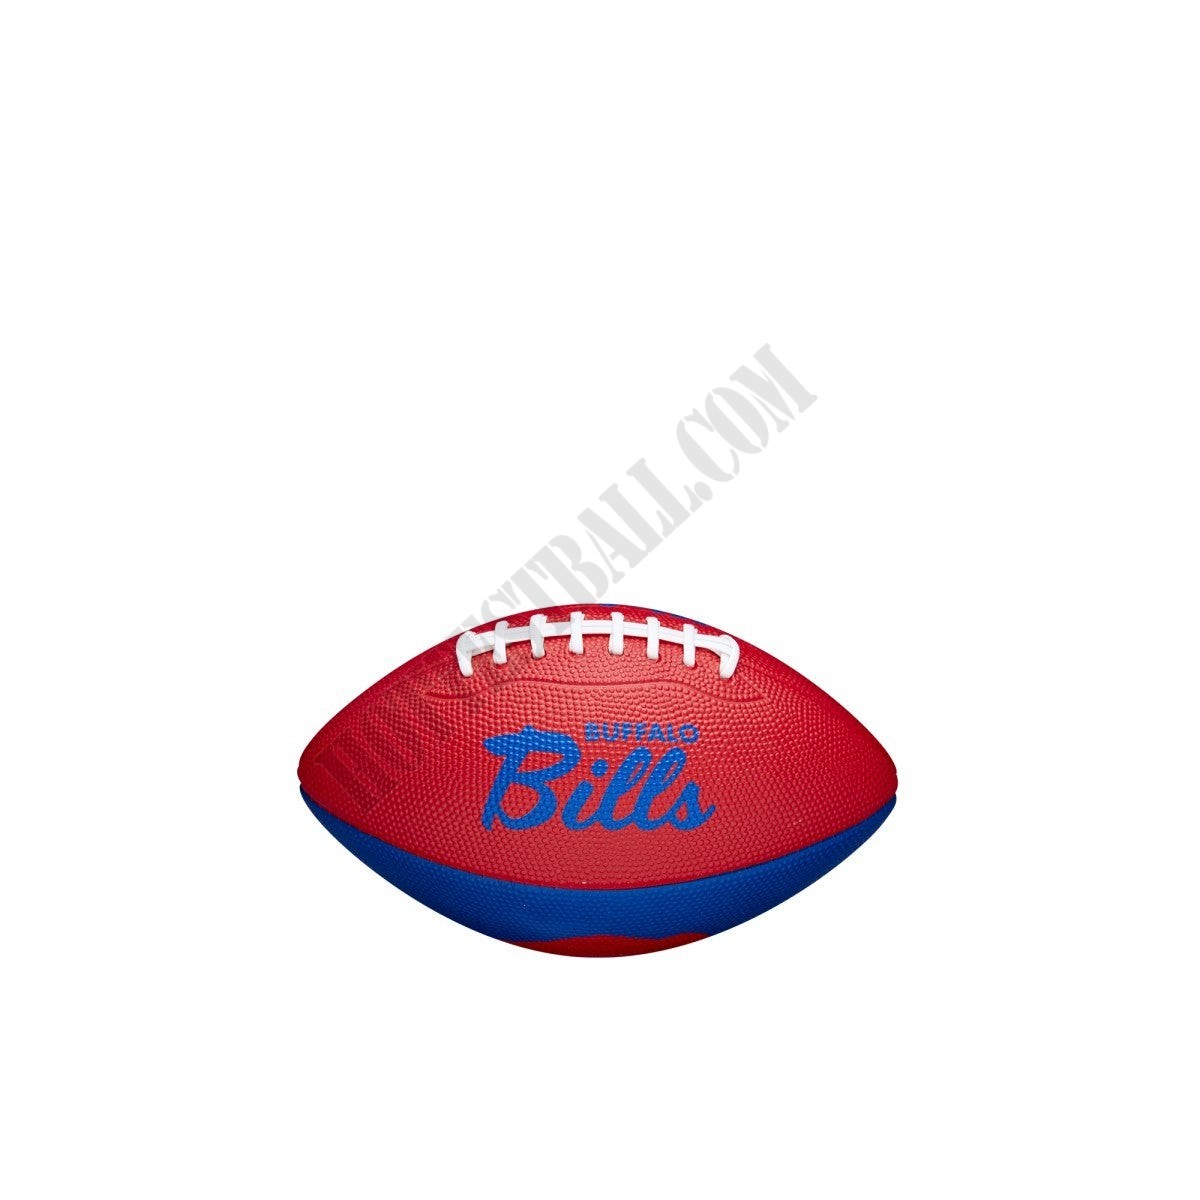 NFL Retro Mini Football - Buffalo Bills ● Wilson Promotions - NFL Retro Mini Football - Buffalo Bills ● Wilson Promotions